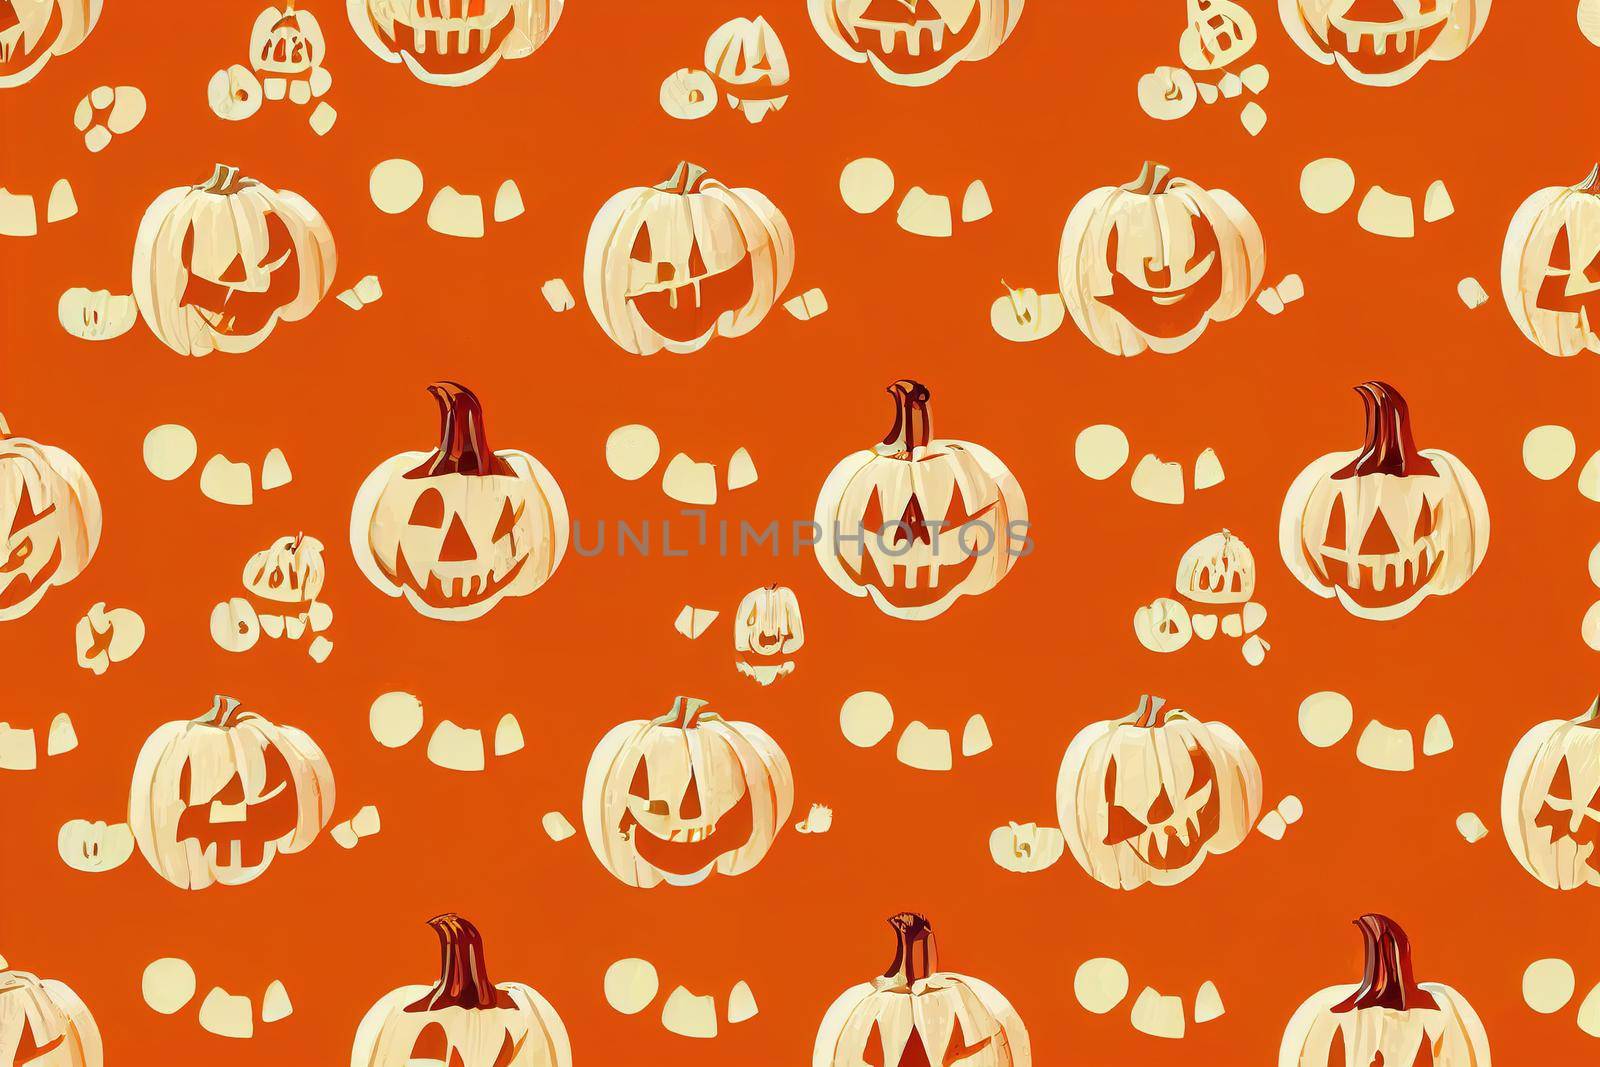 Corona Halloween Pumpkin Seamless Pattern, Pumpkins wearing face masks, Covid 19 virus Halloween background, For Halloween 2020 decoration, fabric, invitation cards, greeting cards, face mask v1